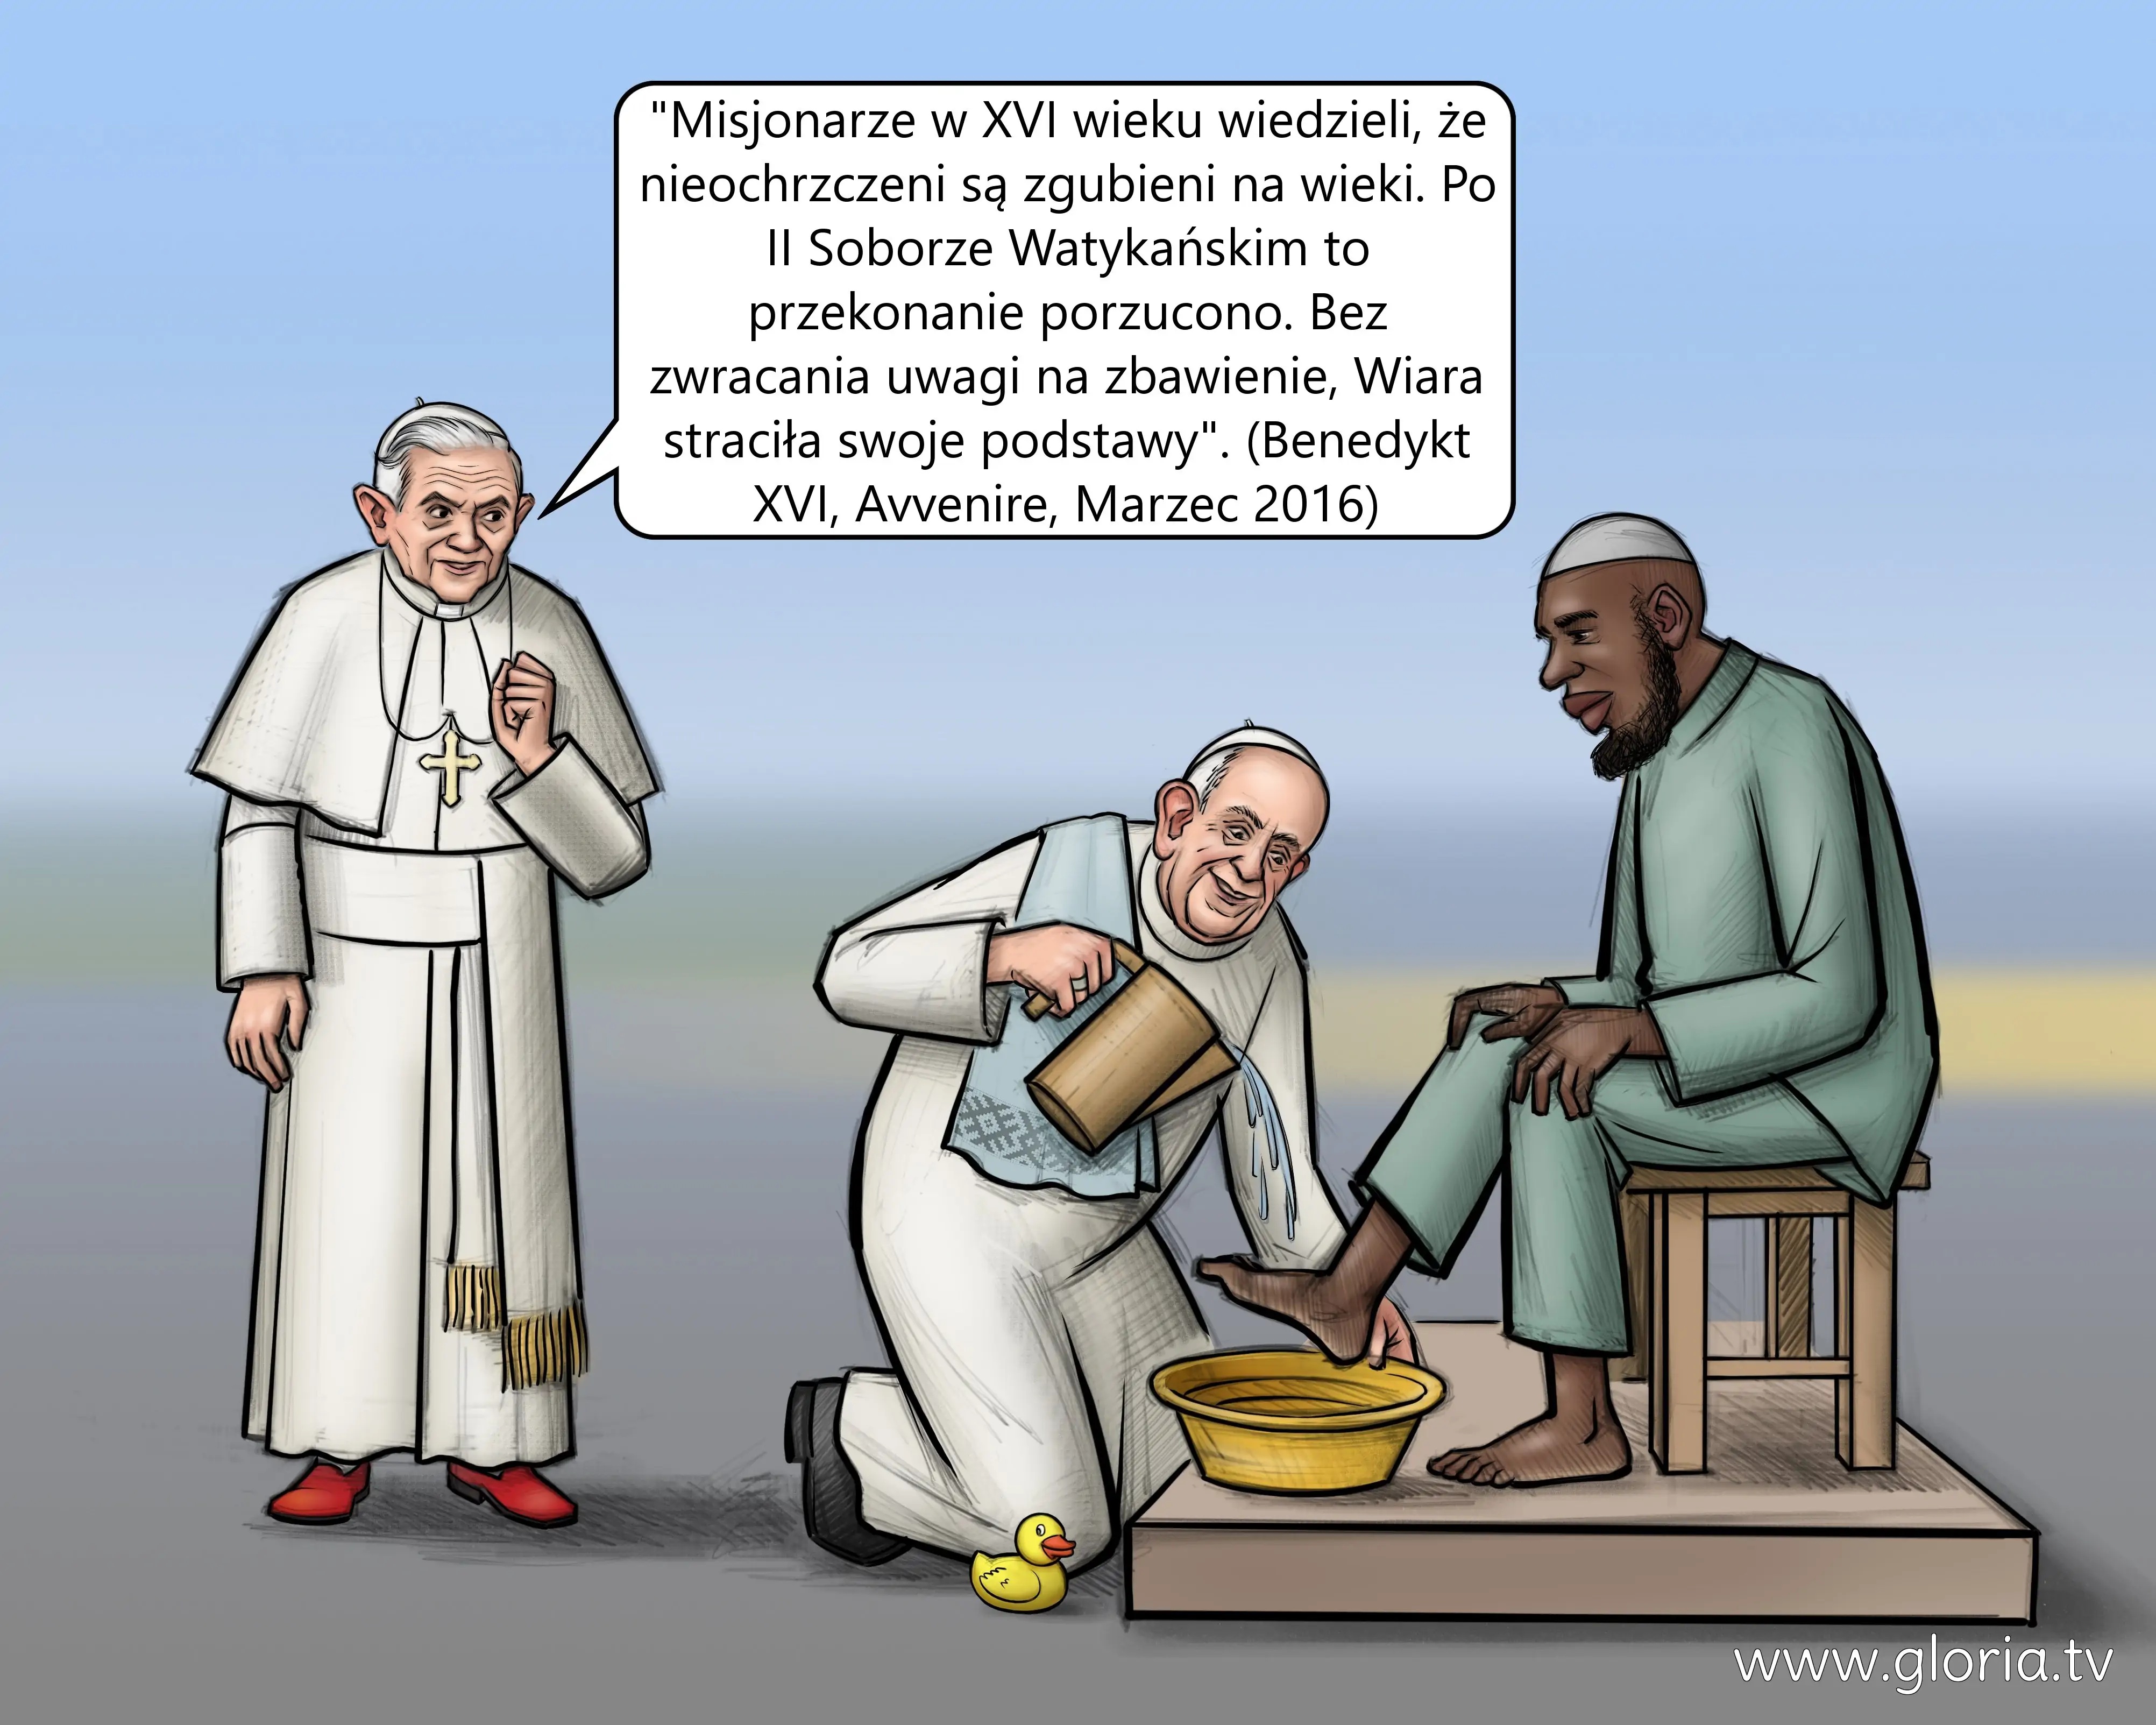 Pseudopapie apostata Bergoglio umywa nogi islamicie